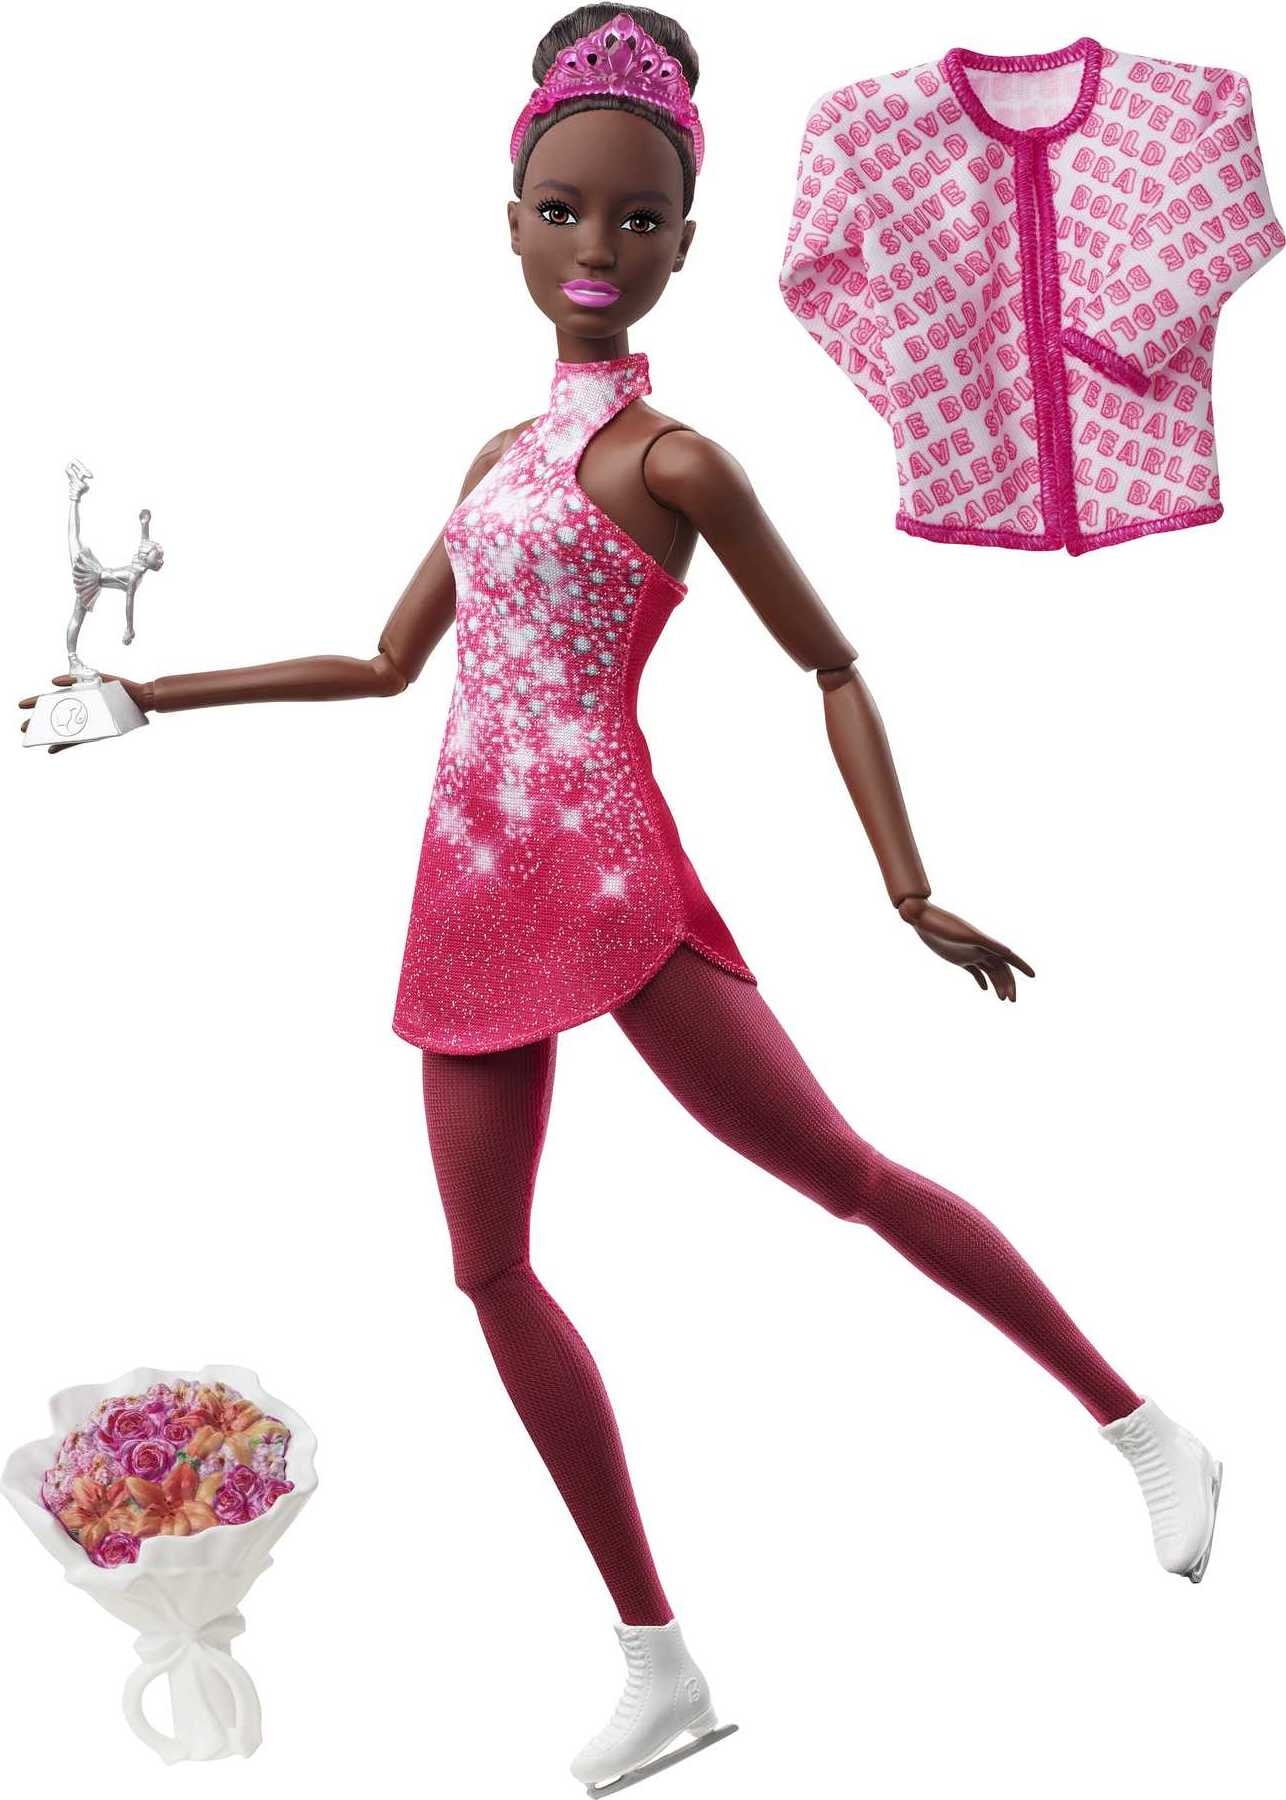 Barbie Skater Doll, Brunette Fashion Doll with Pink Leotard, Trophy Winter Sport Accessories - Walmart.com